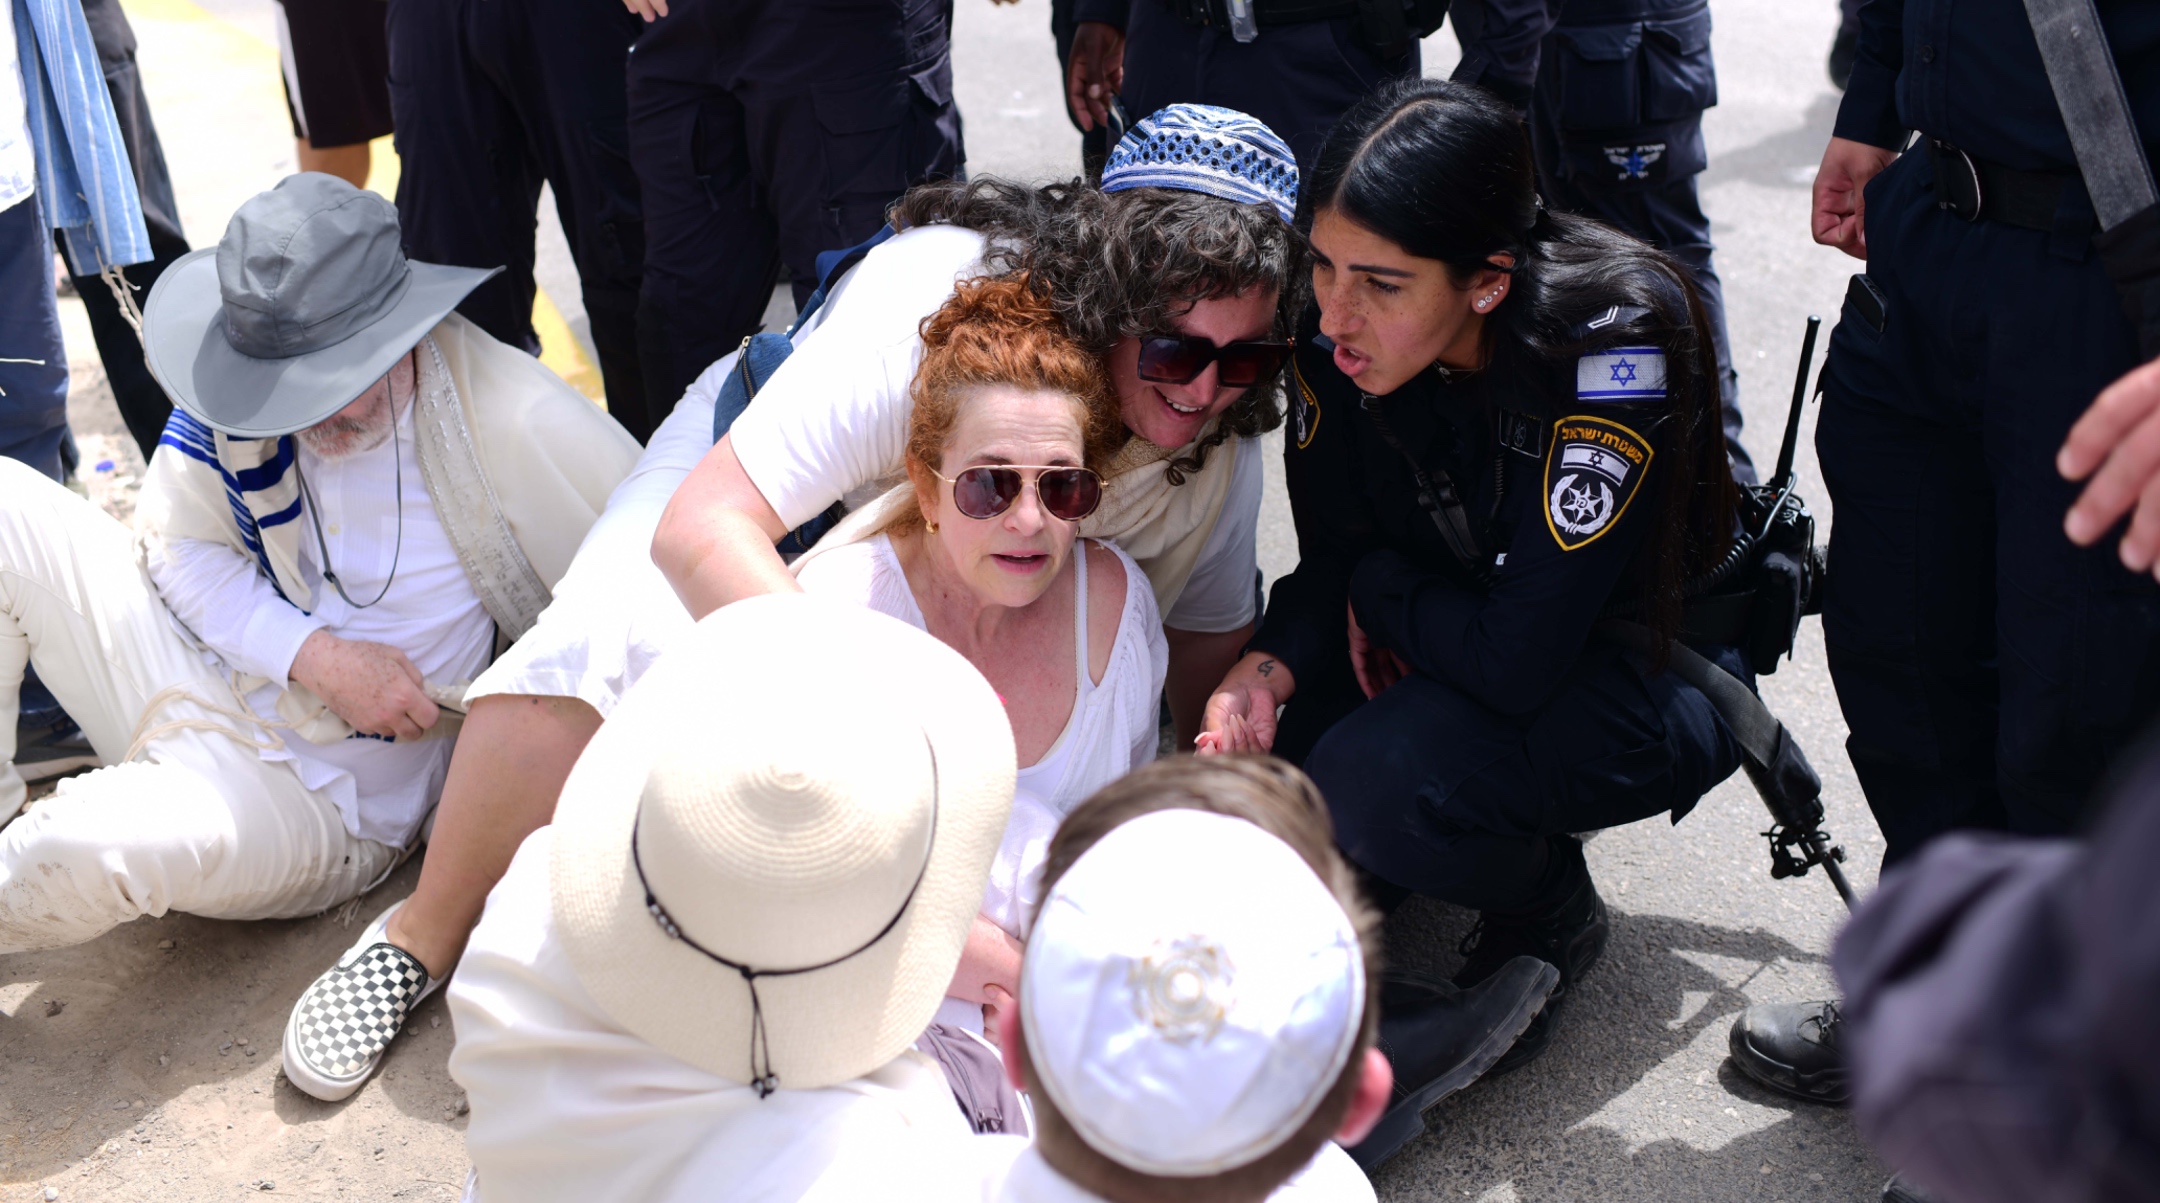 Israeli police arrest author Ayelet Waldman and 6 others in Gaza border protest